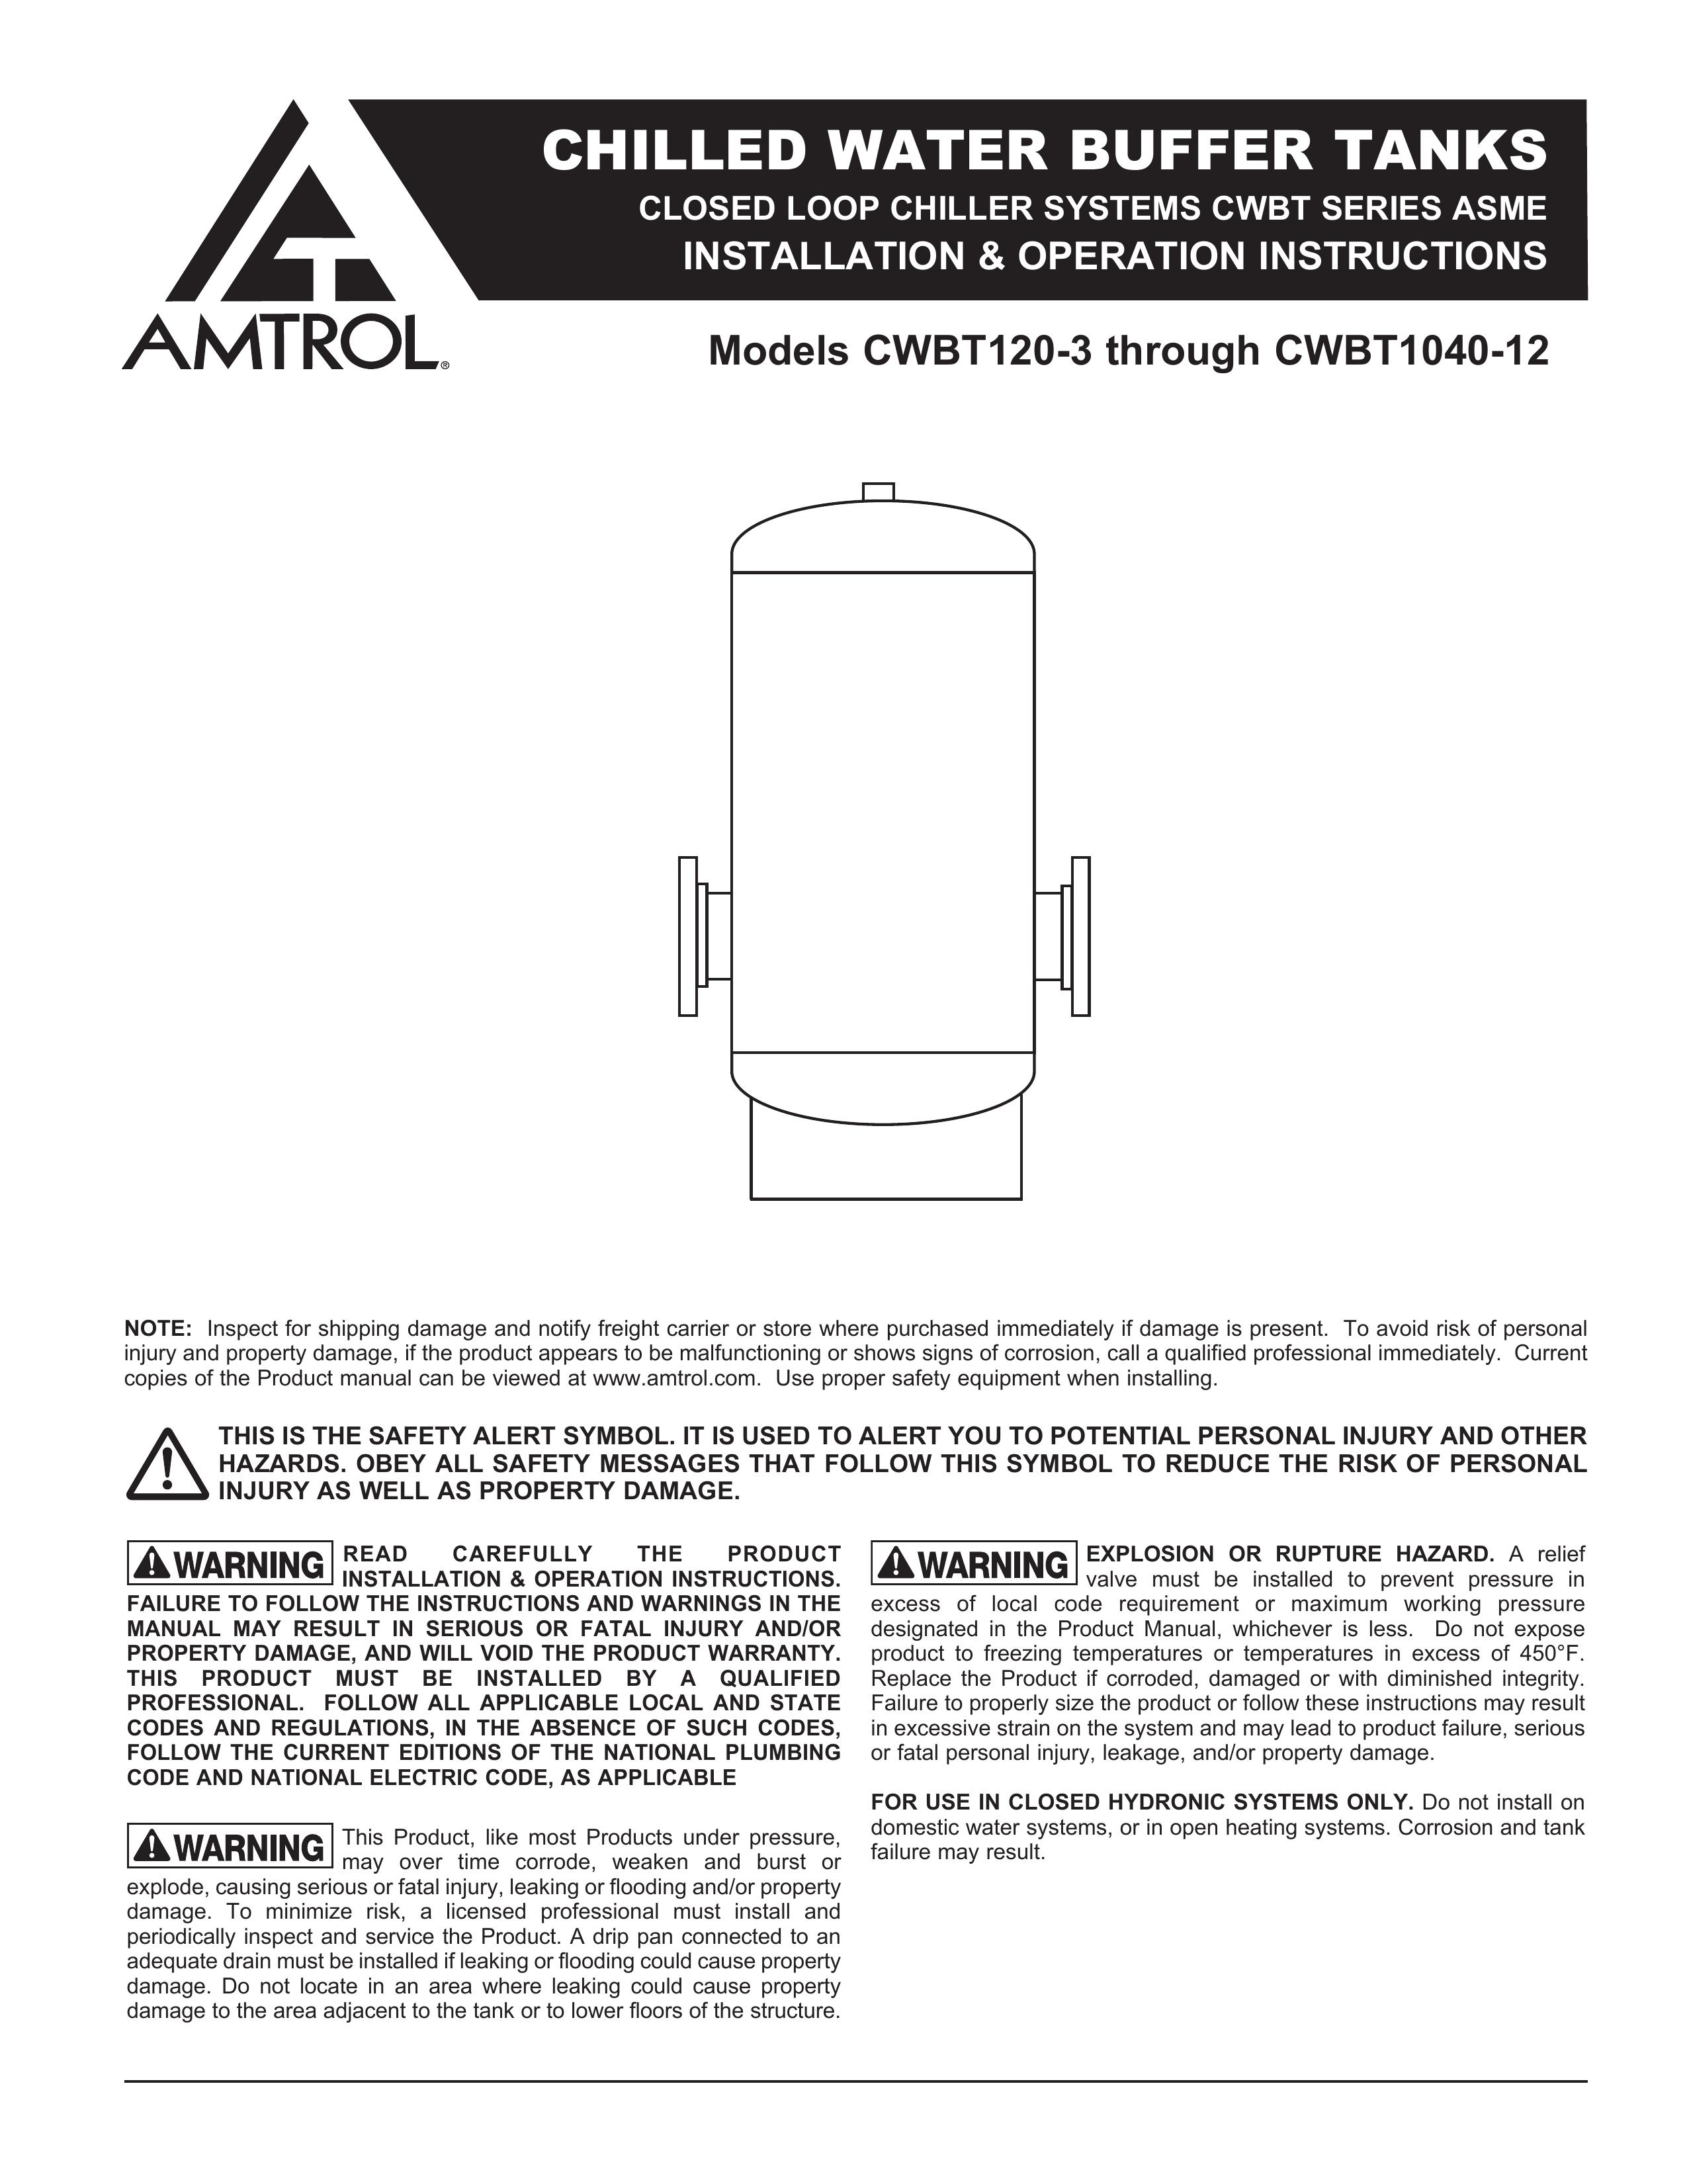 Amtrol CWBT1040-12 Marine Sanitation System User Manual